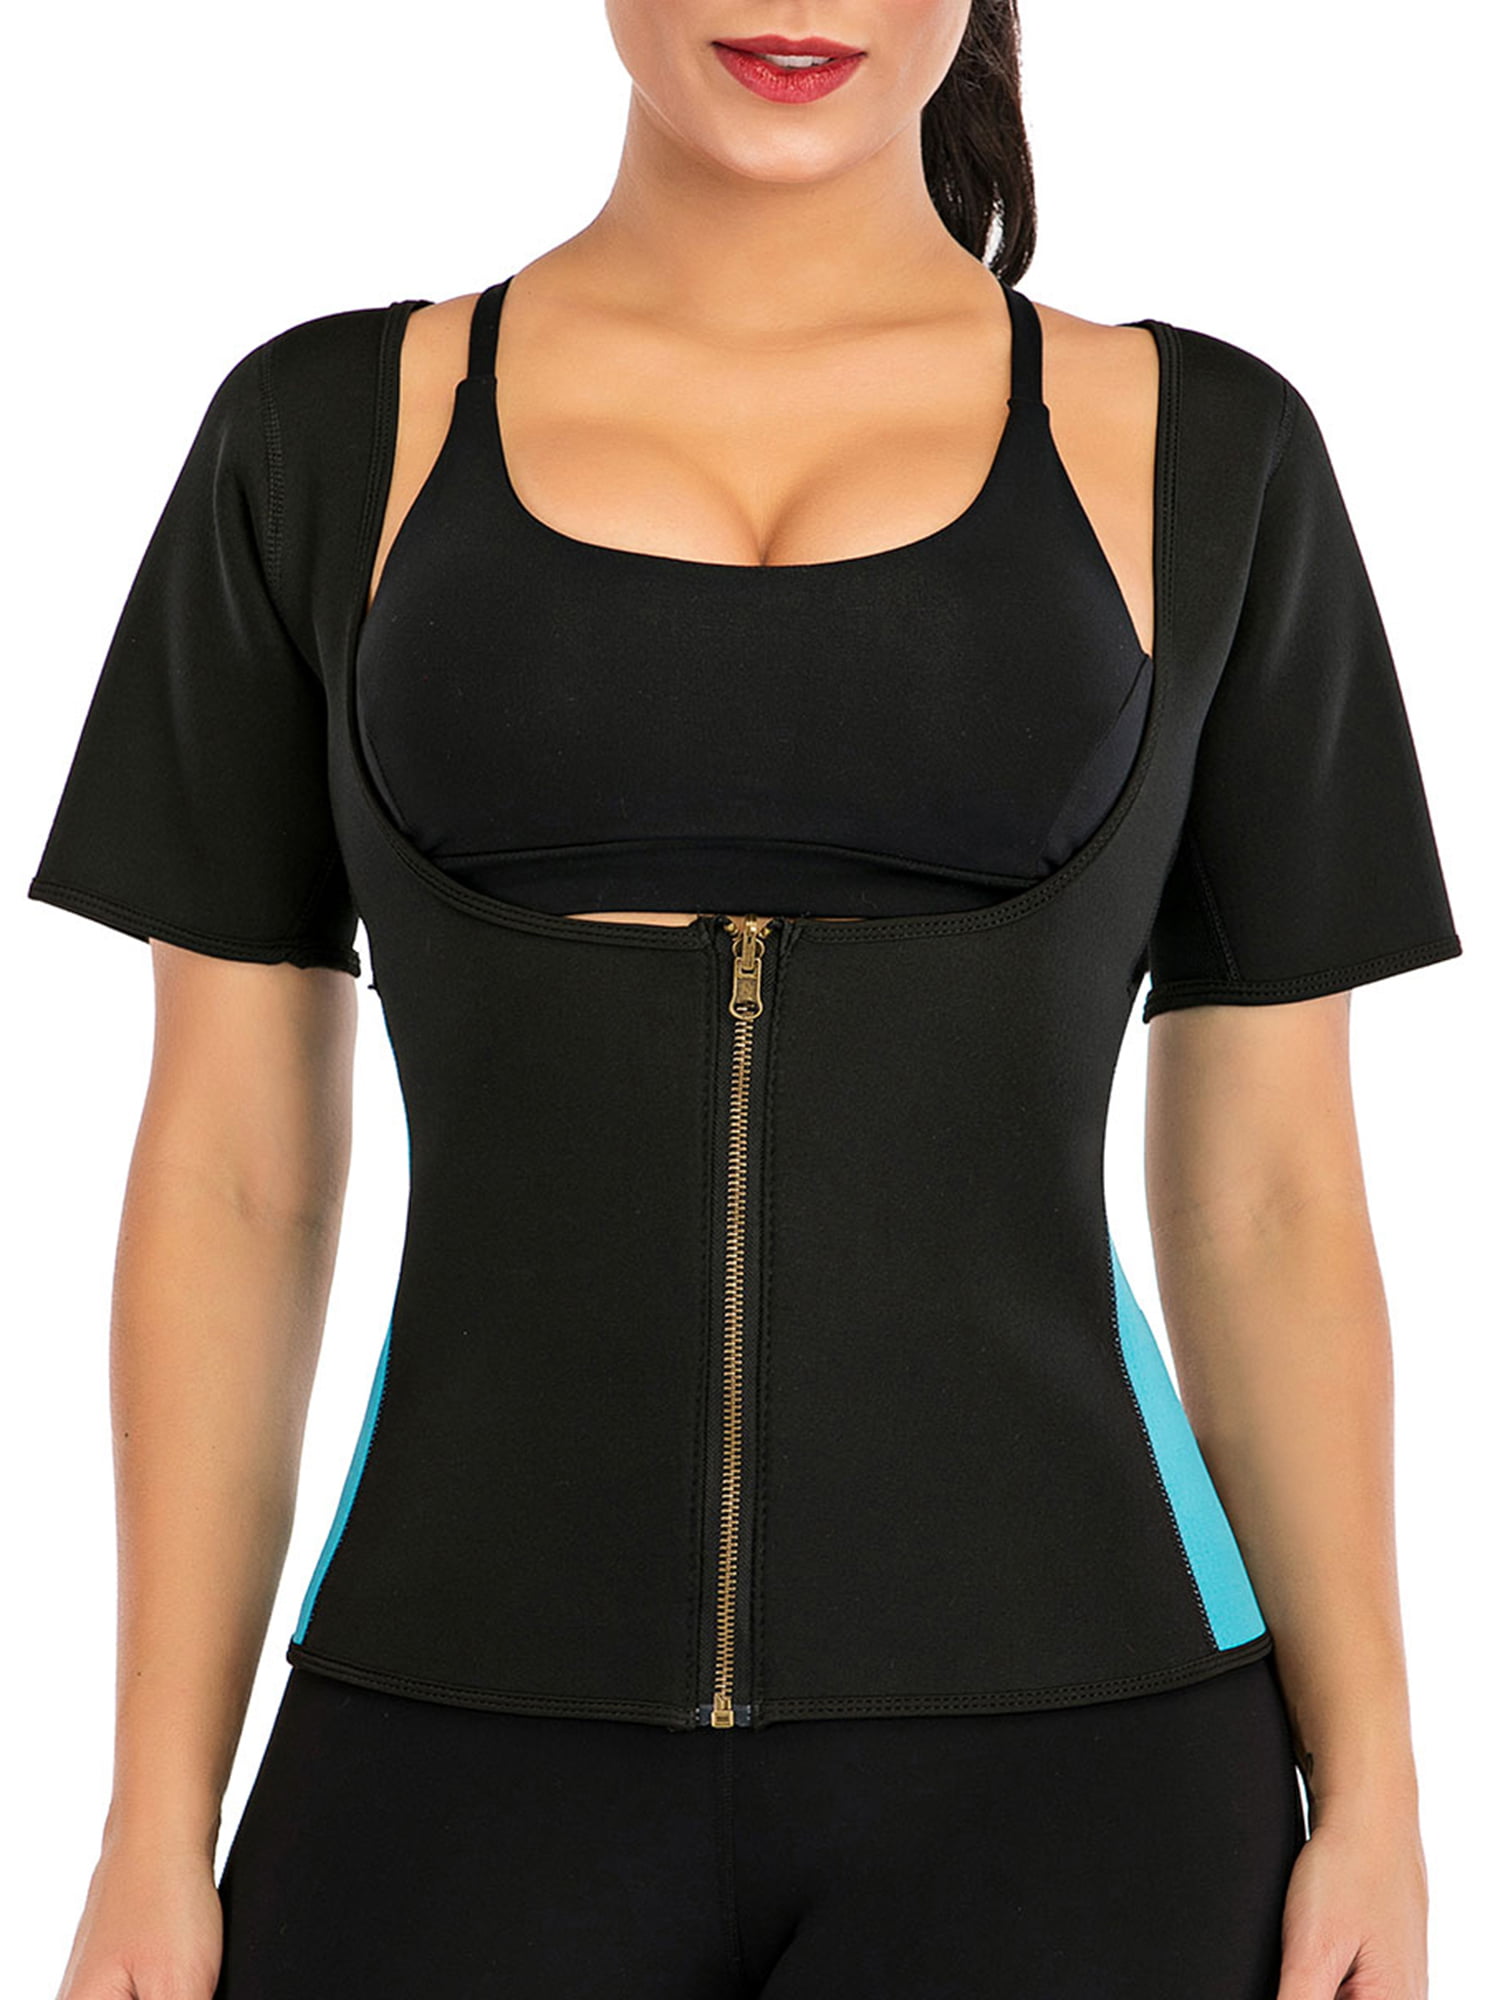 Women Sauna Sweat Waist Trainer Corset Workout Suit Body Shaper Vest with Zipper 